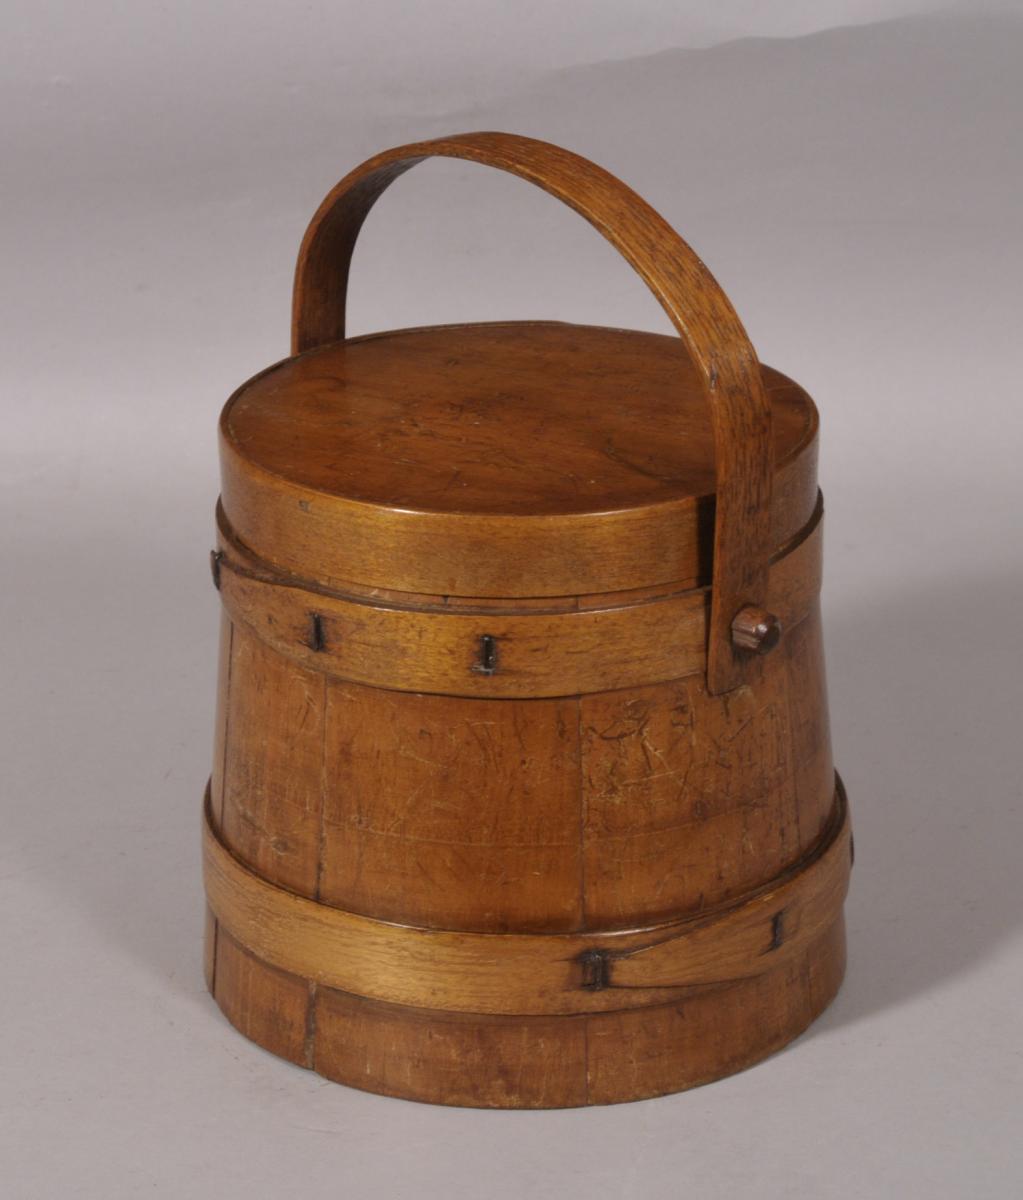 S/5883 Antique Treen 19th Century Pine Flour Barrel